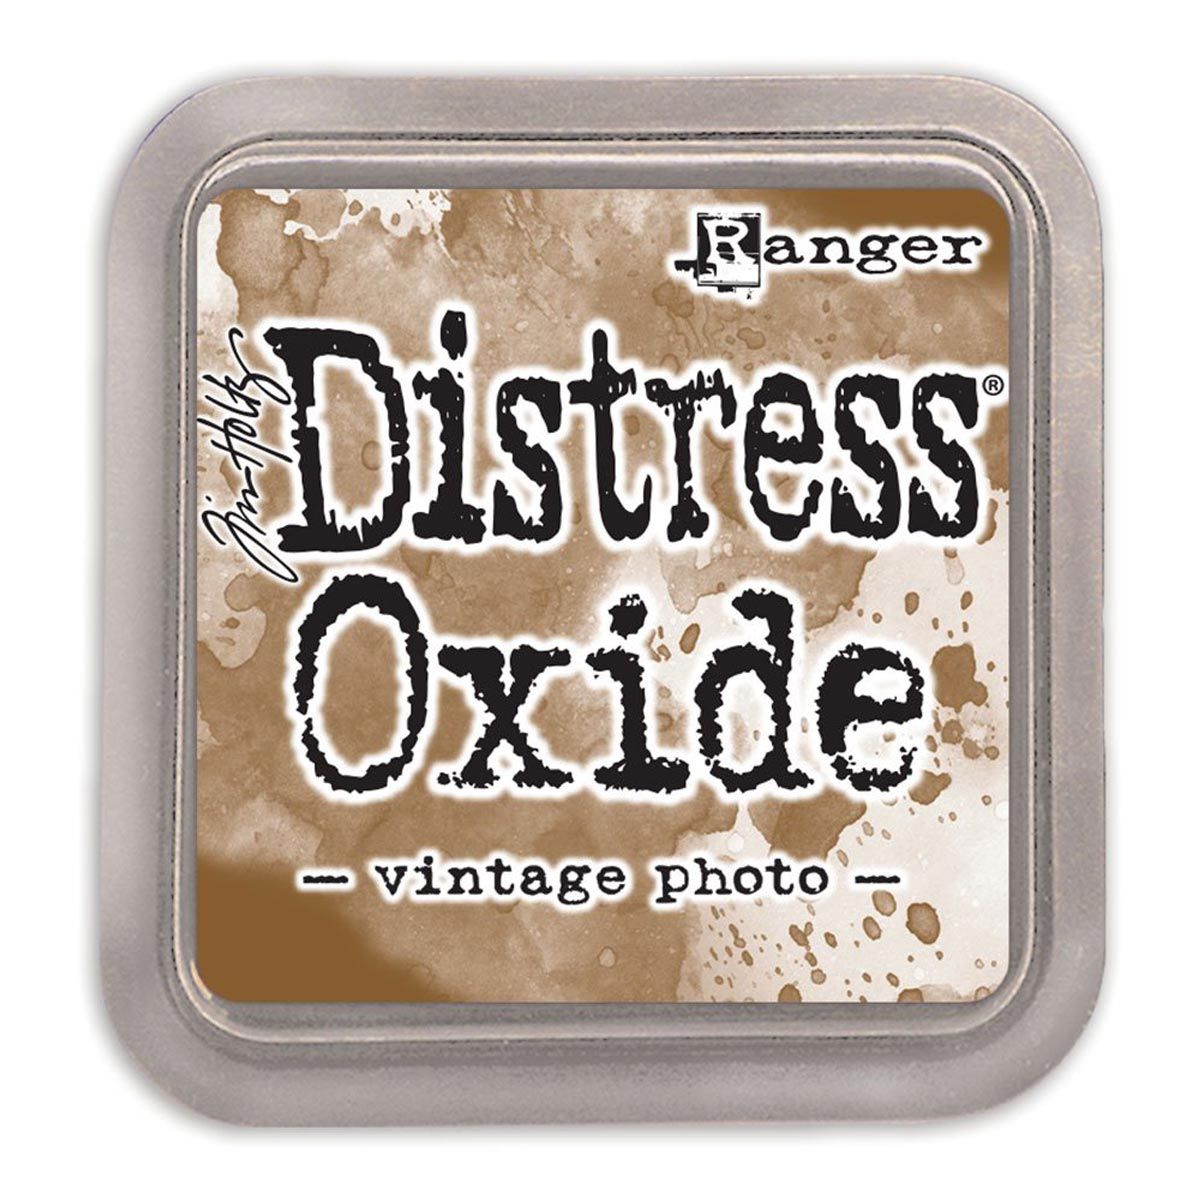 Tim Holtz Distress Oxide Ink Pad Vintage Photo